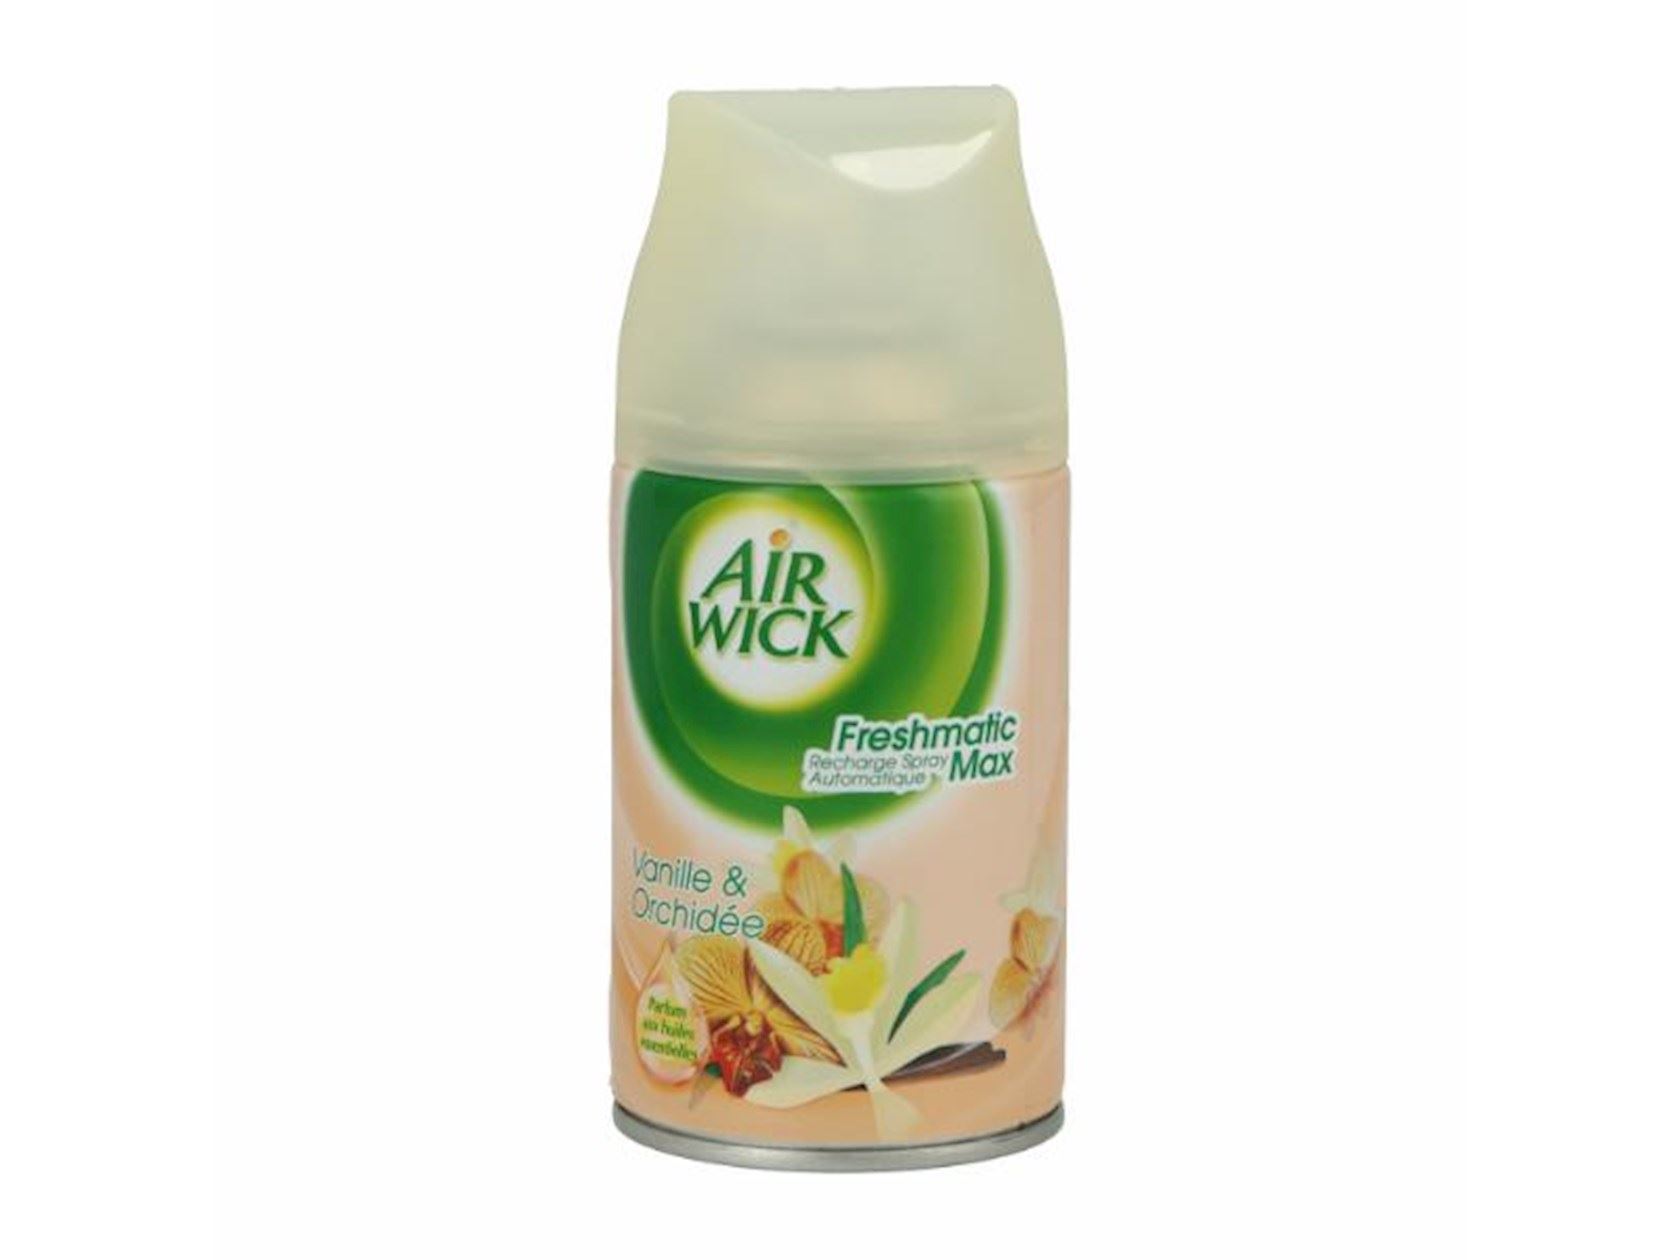 Air-Wick-Freshmatic-recharge-250ml-Vanilla-Orchid